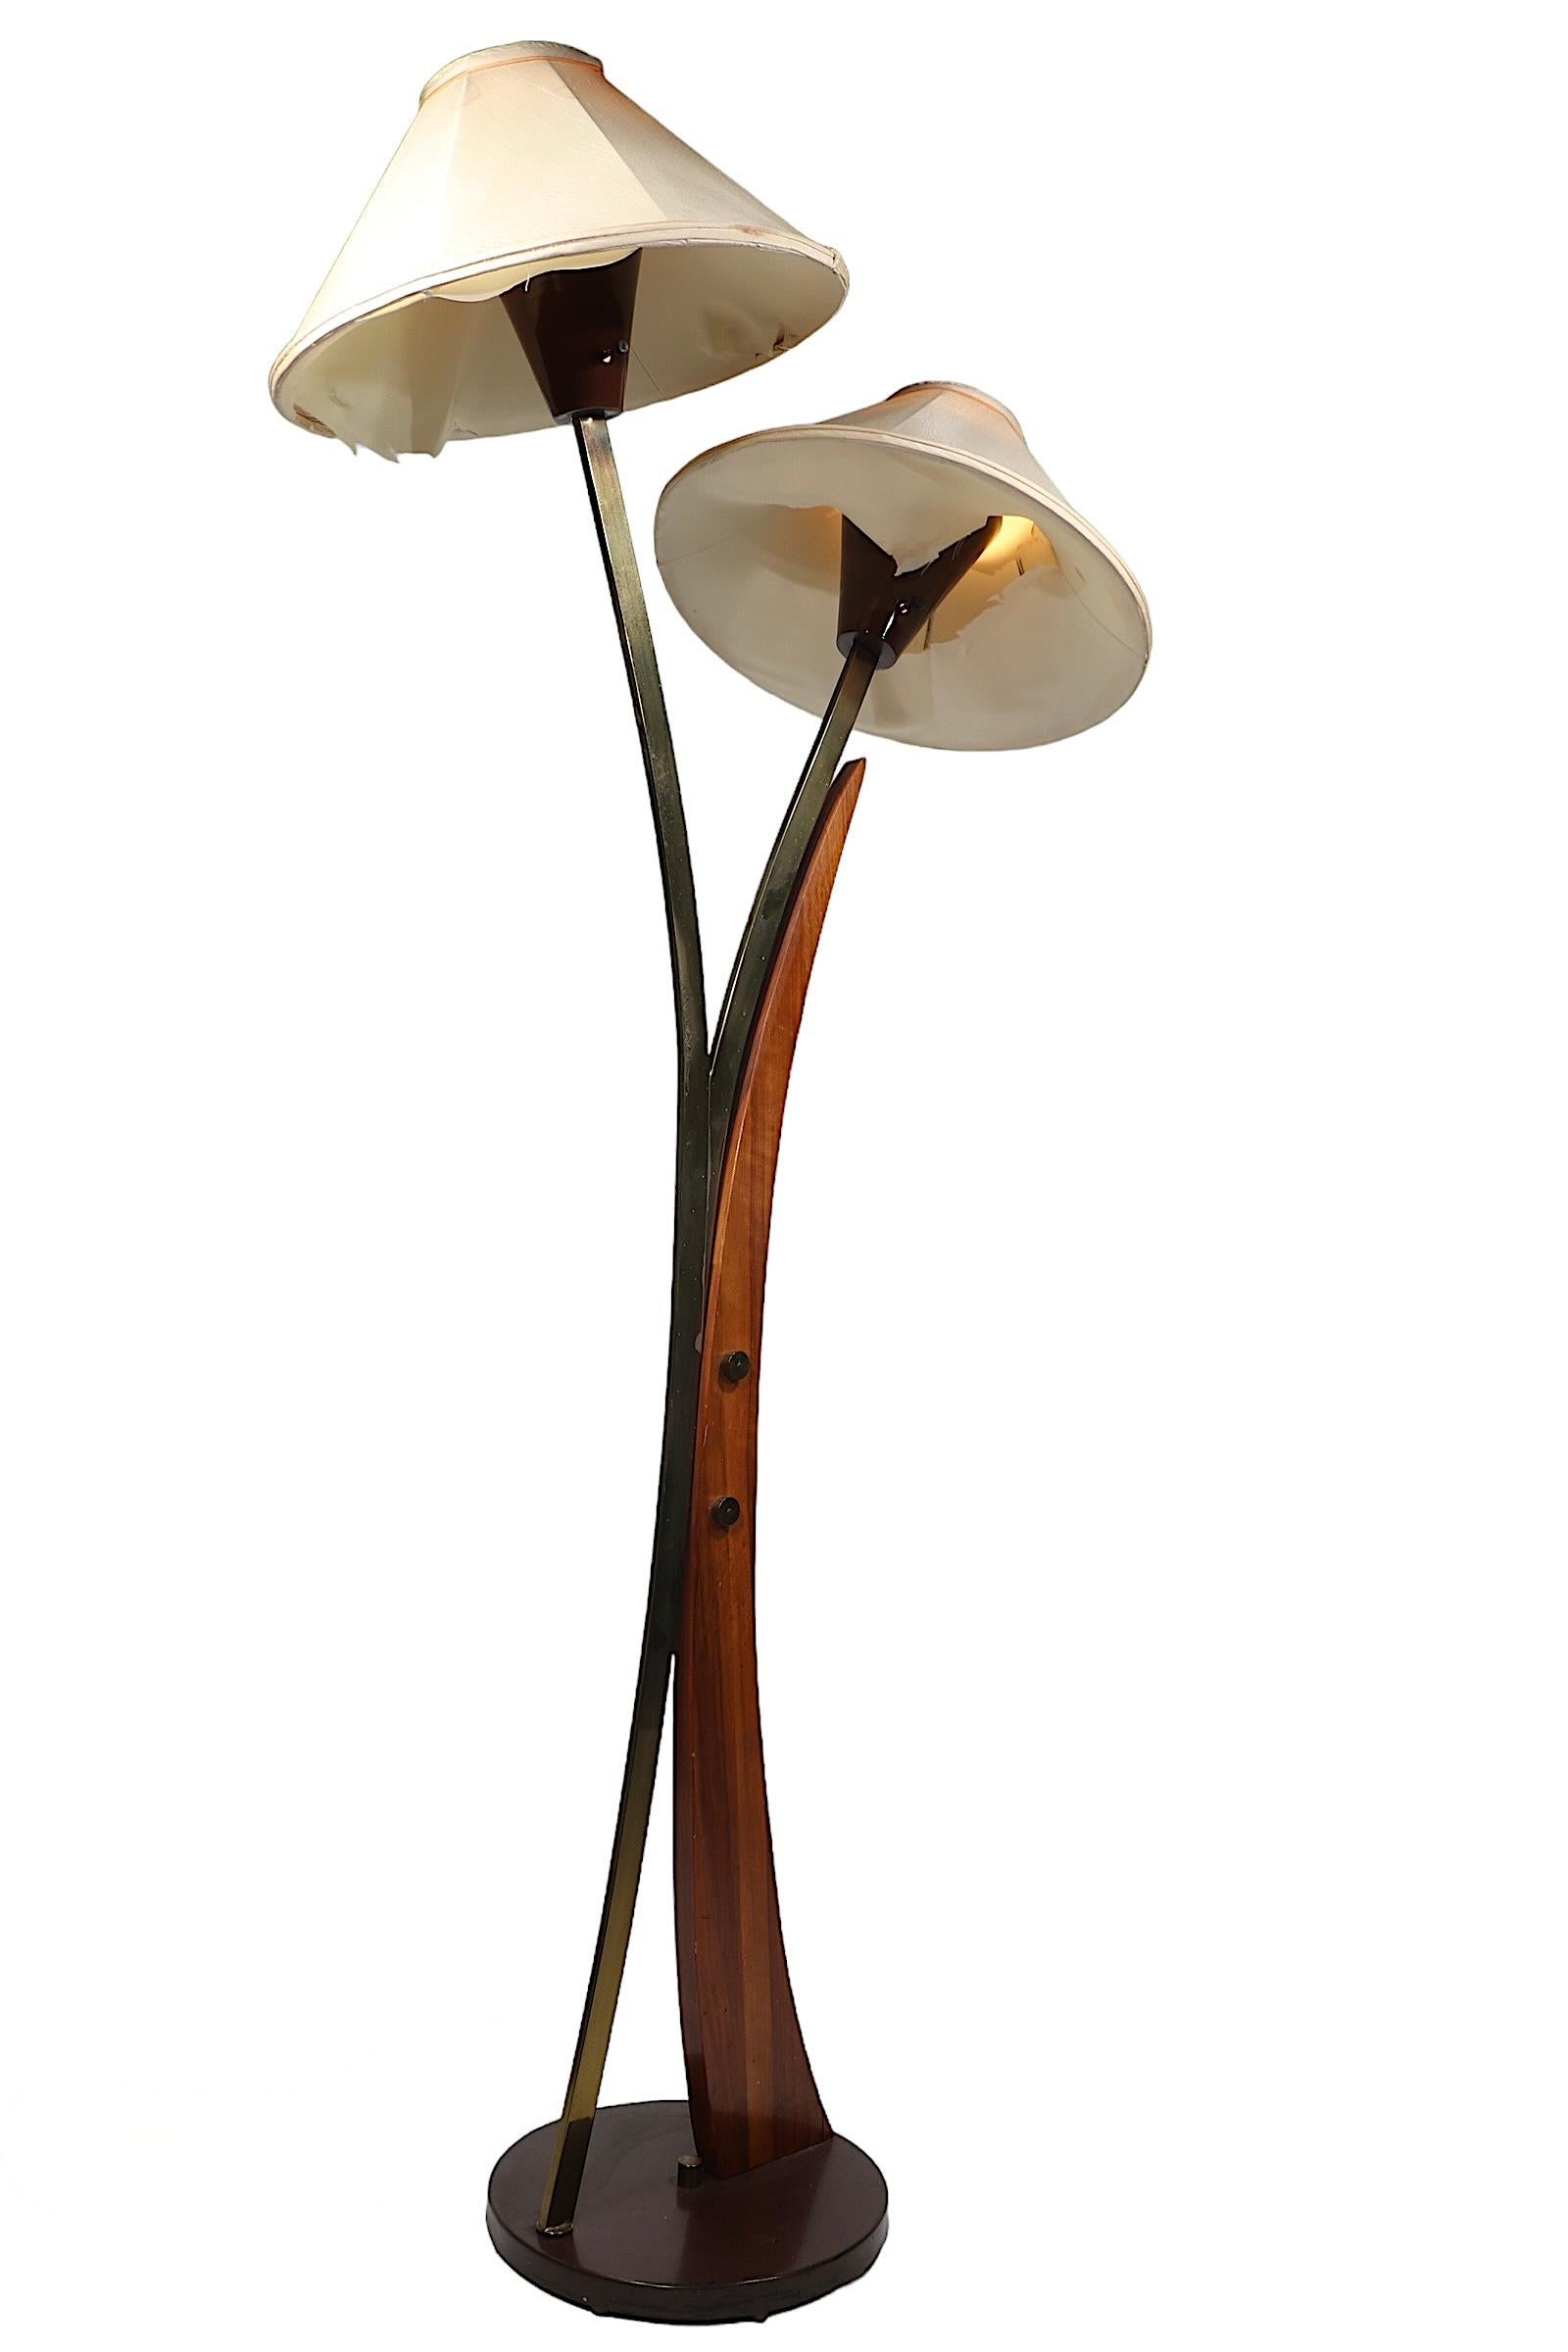 American Mid Century Floor Lamp For Sale